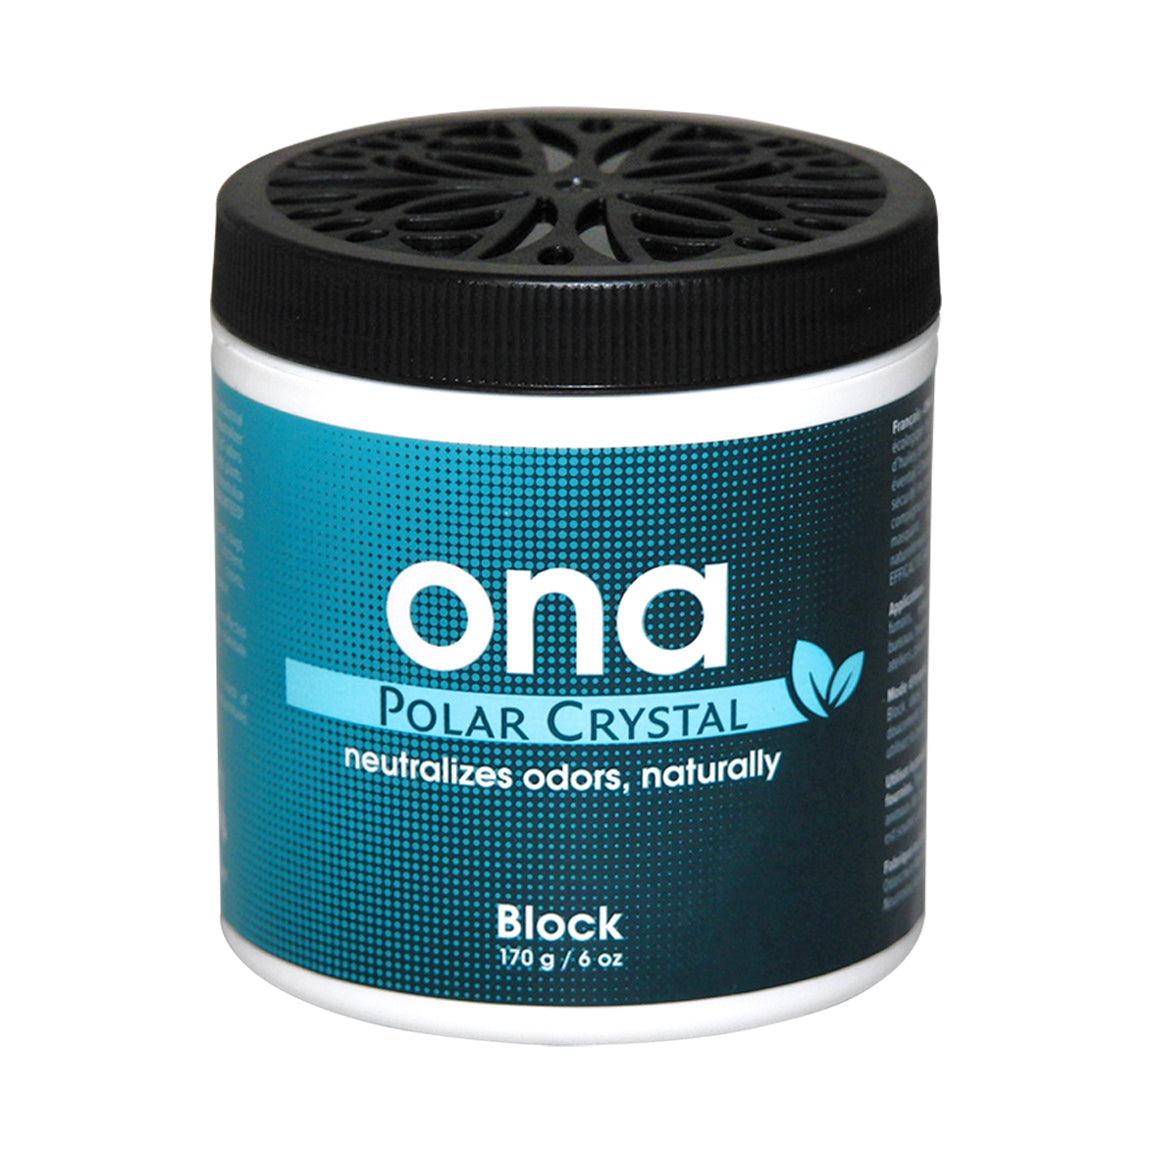 ONA Block